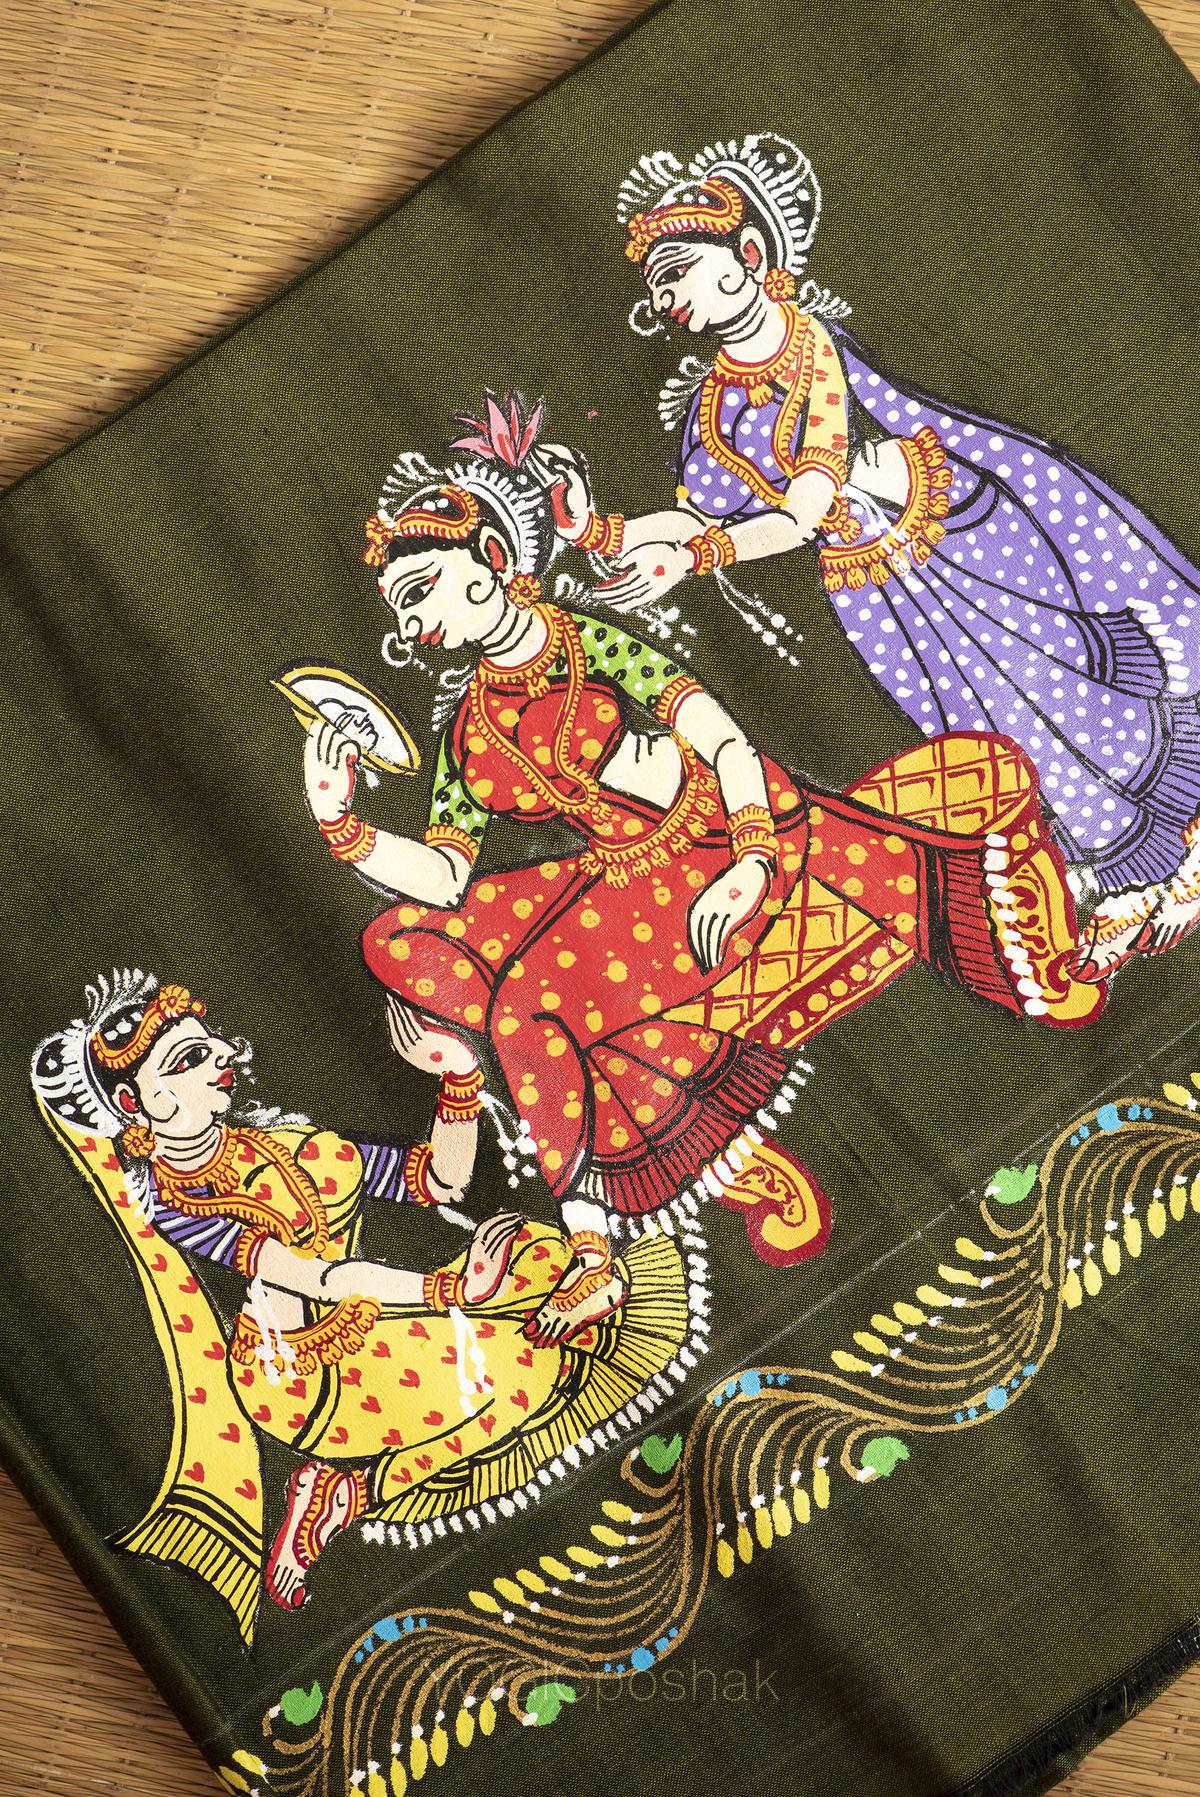 A Yogic Poshak creation with Patta Chitra paining on handloom sari